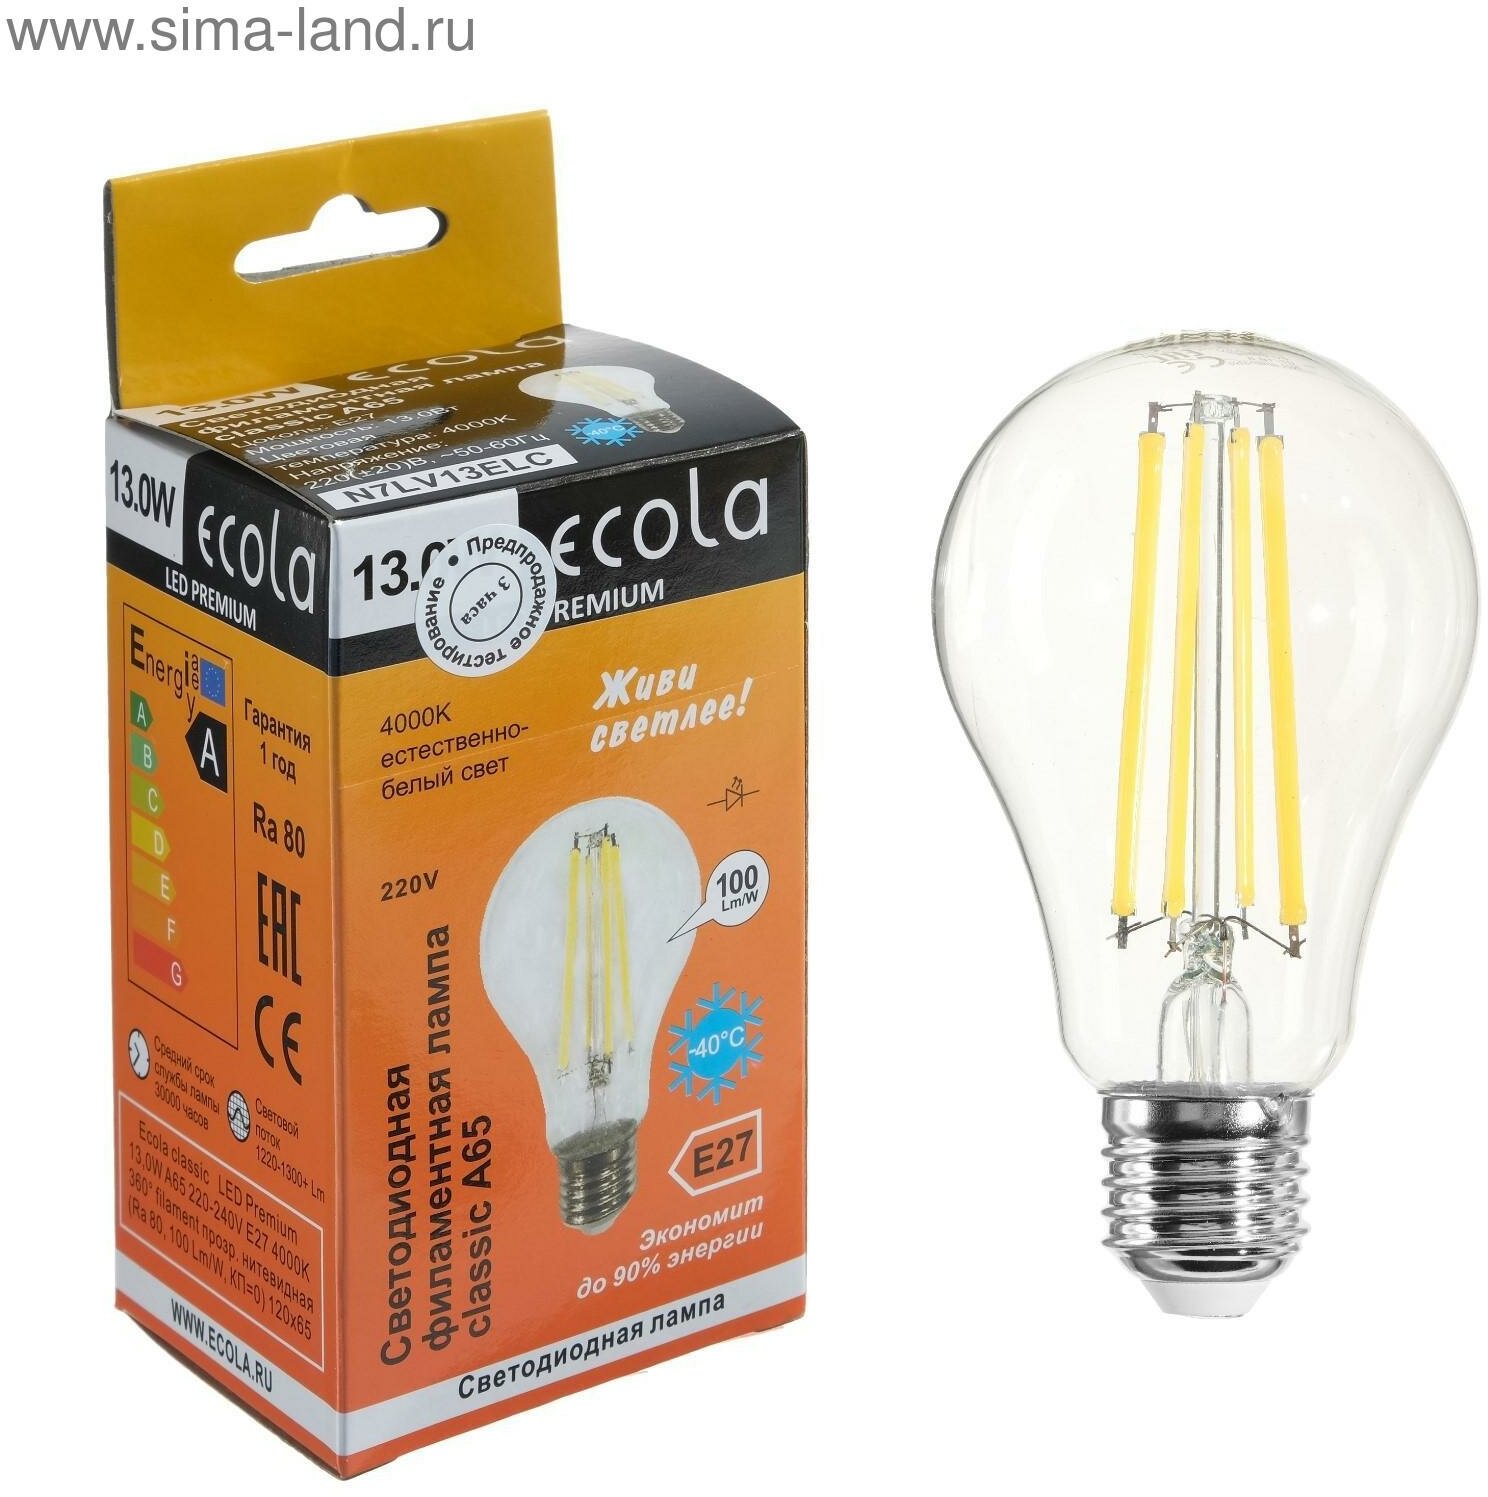 Лампа светодиодная classic Premium, Е27, А65, 13 Вт, 4000 К, 360°, 220 В, филаментная